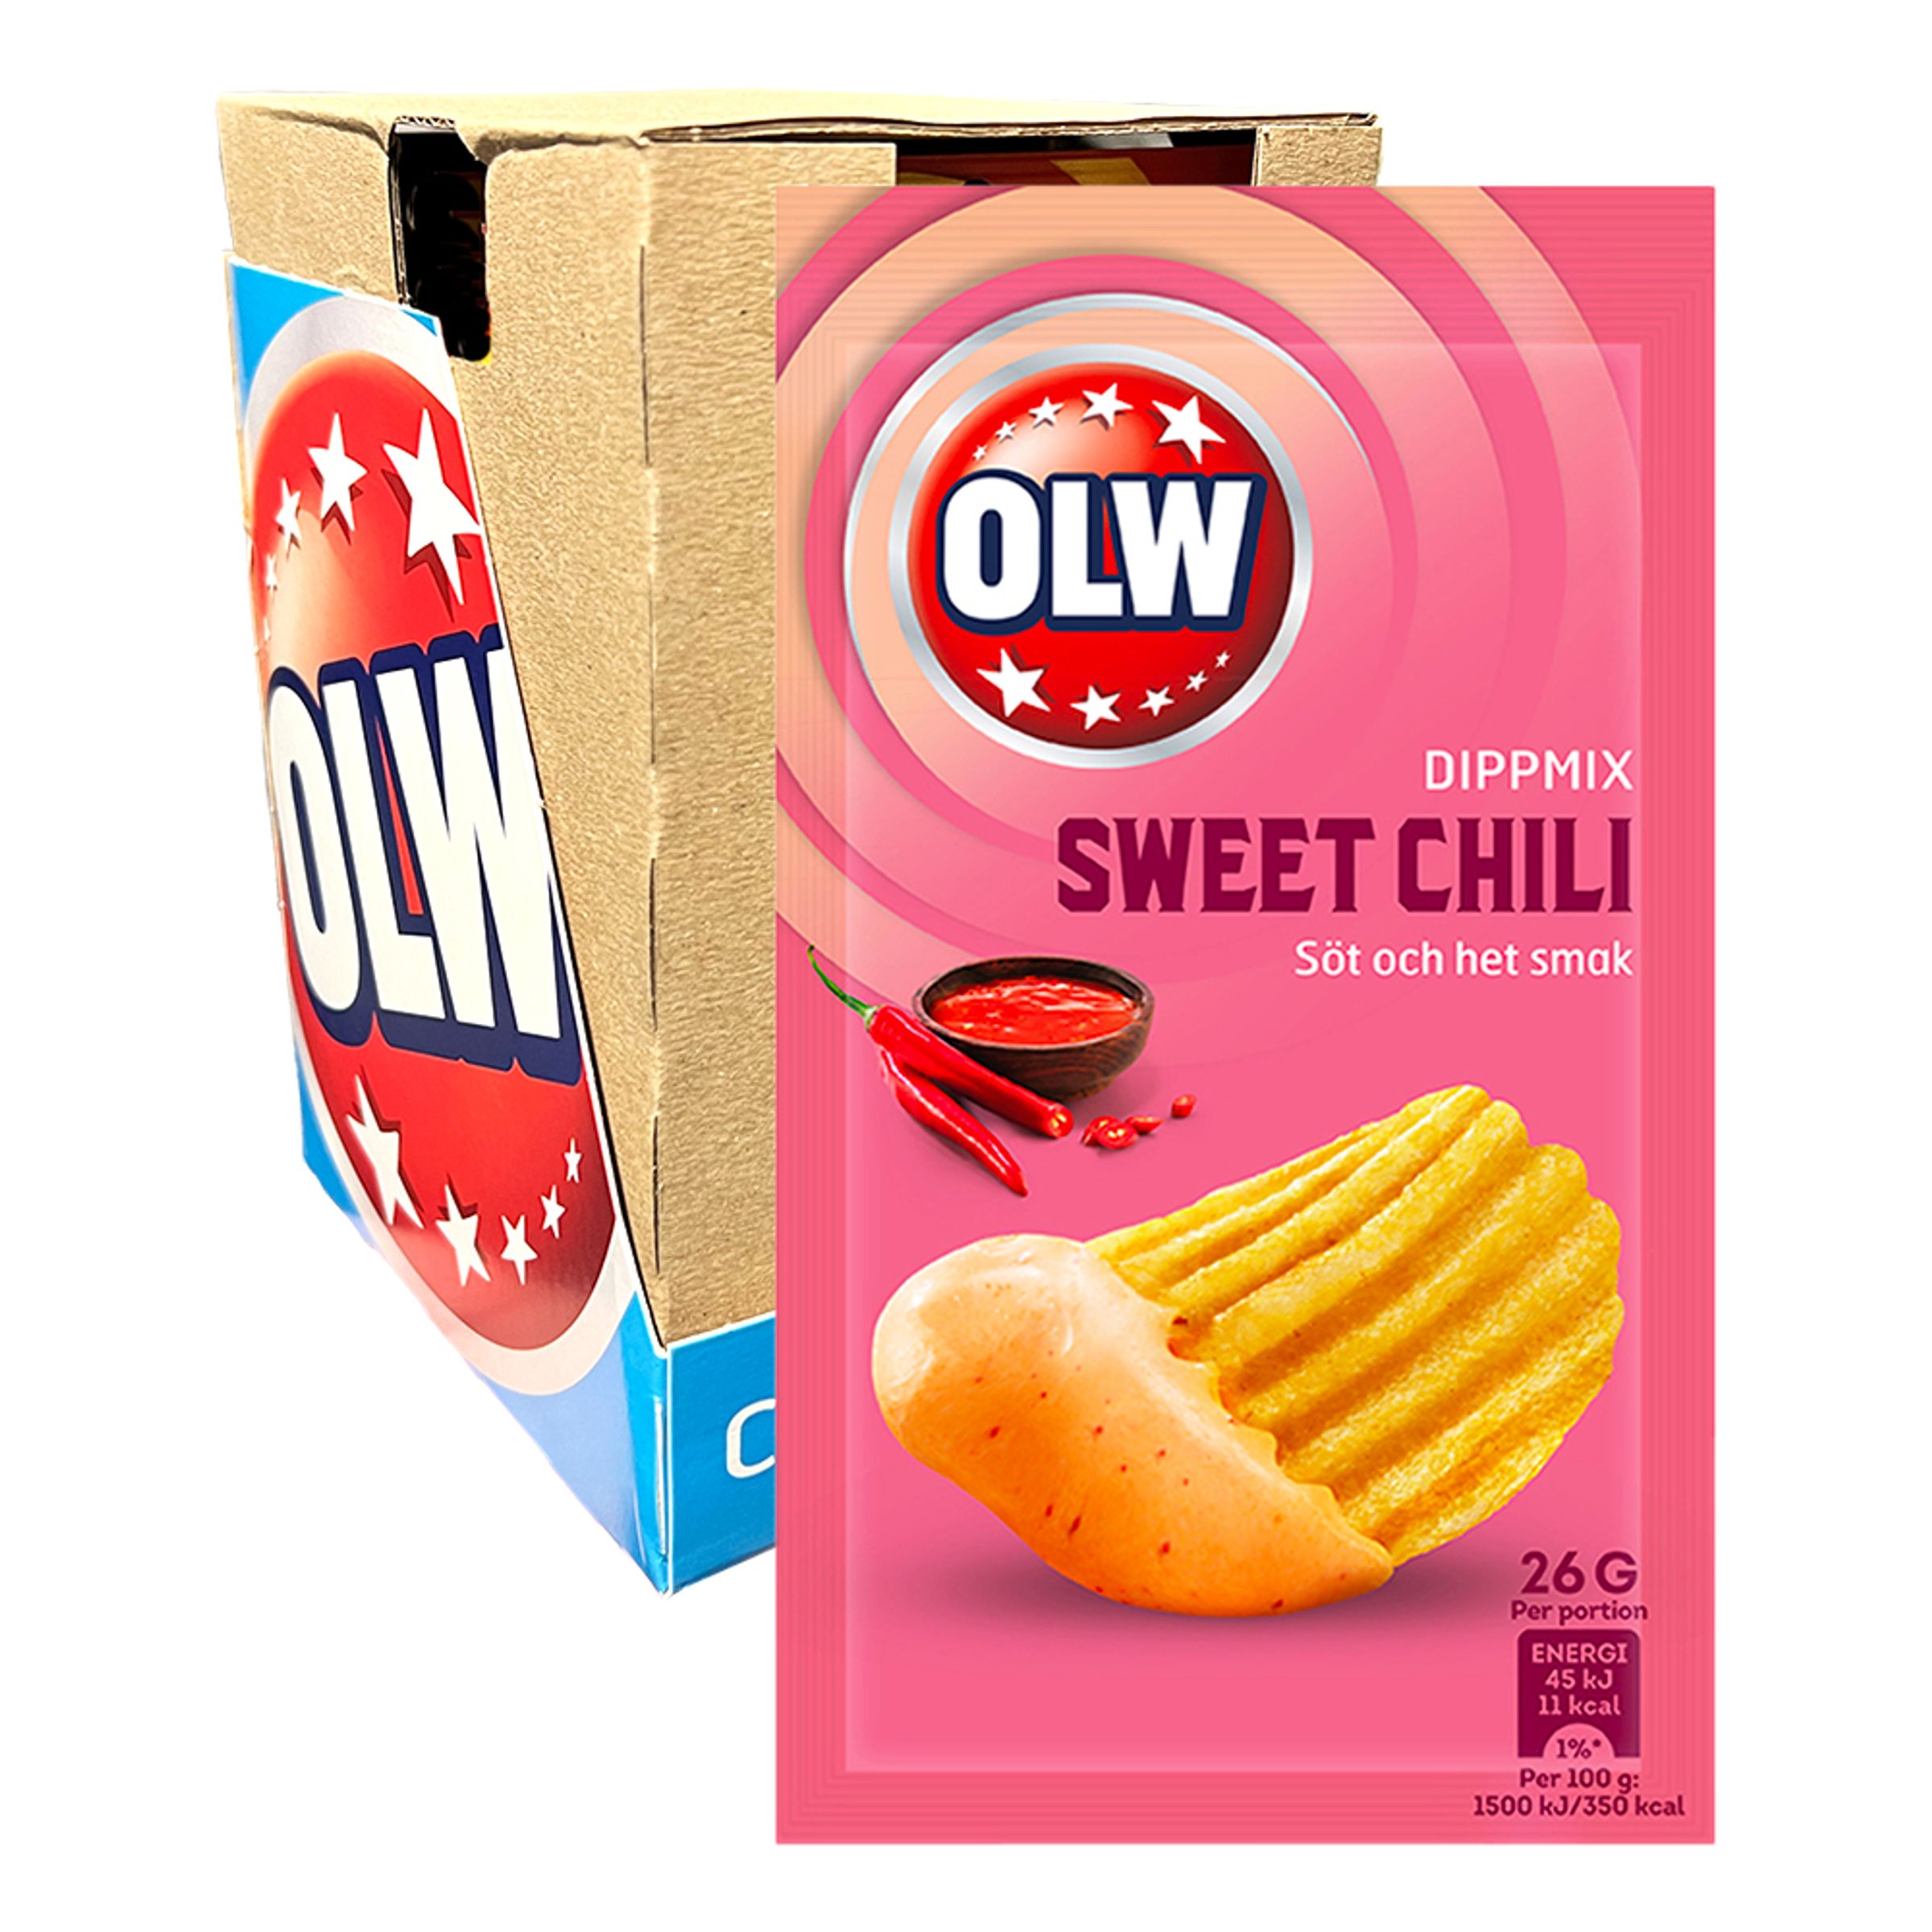 Läs mer om OLW Dipmix Sweet Chili Storpack - 16-pack